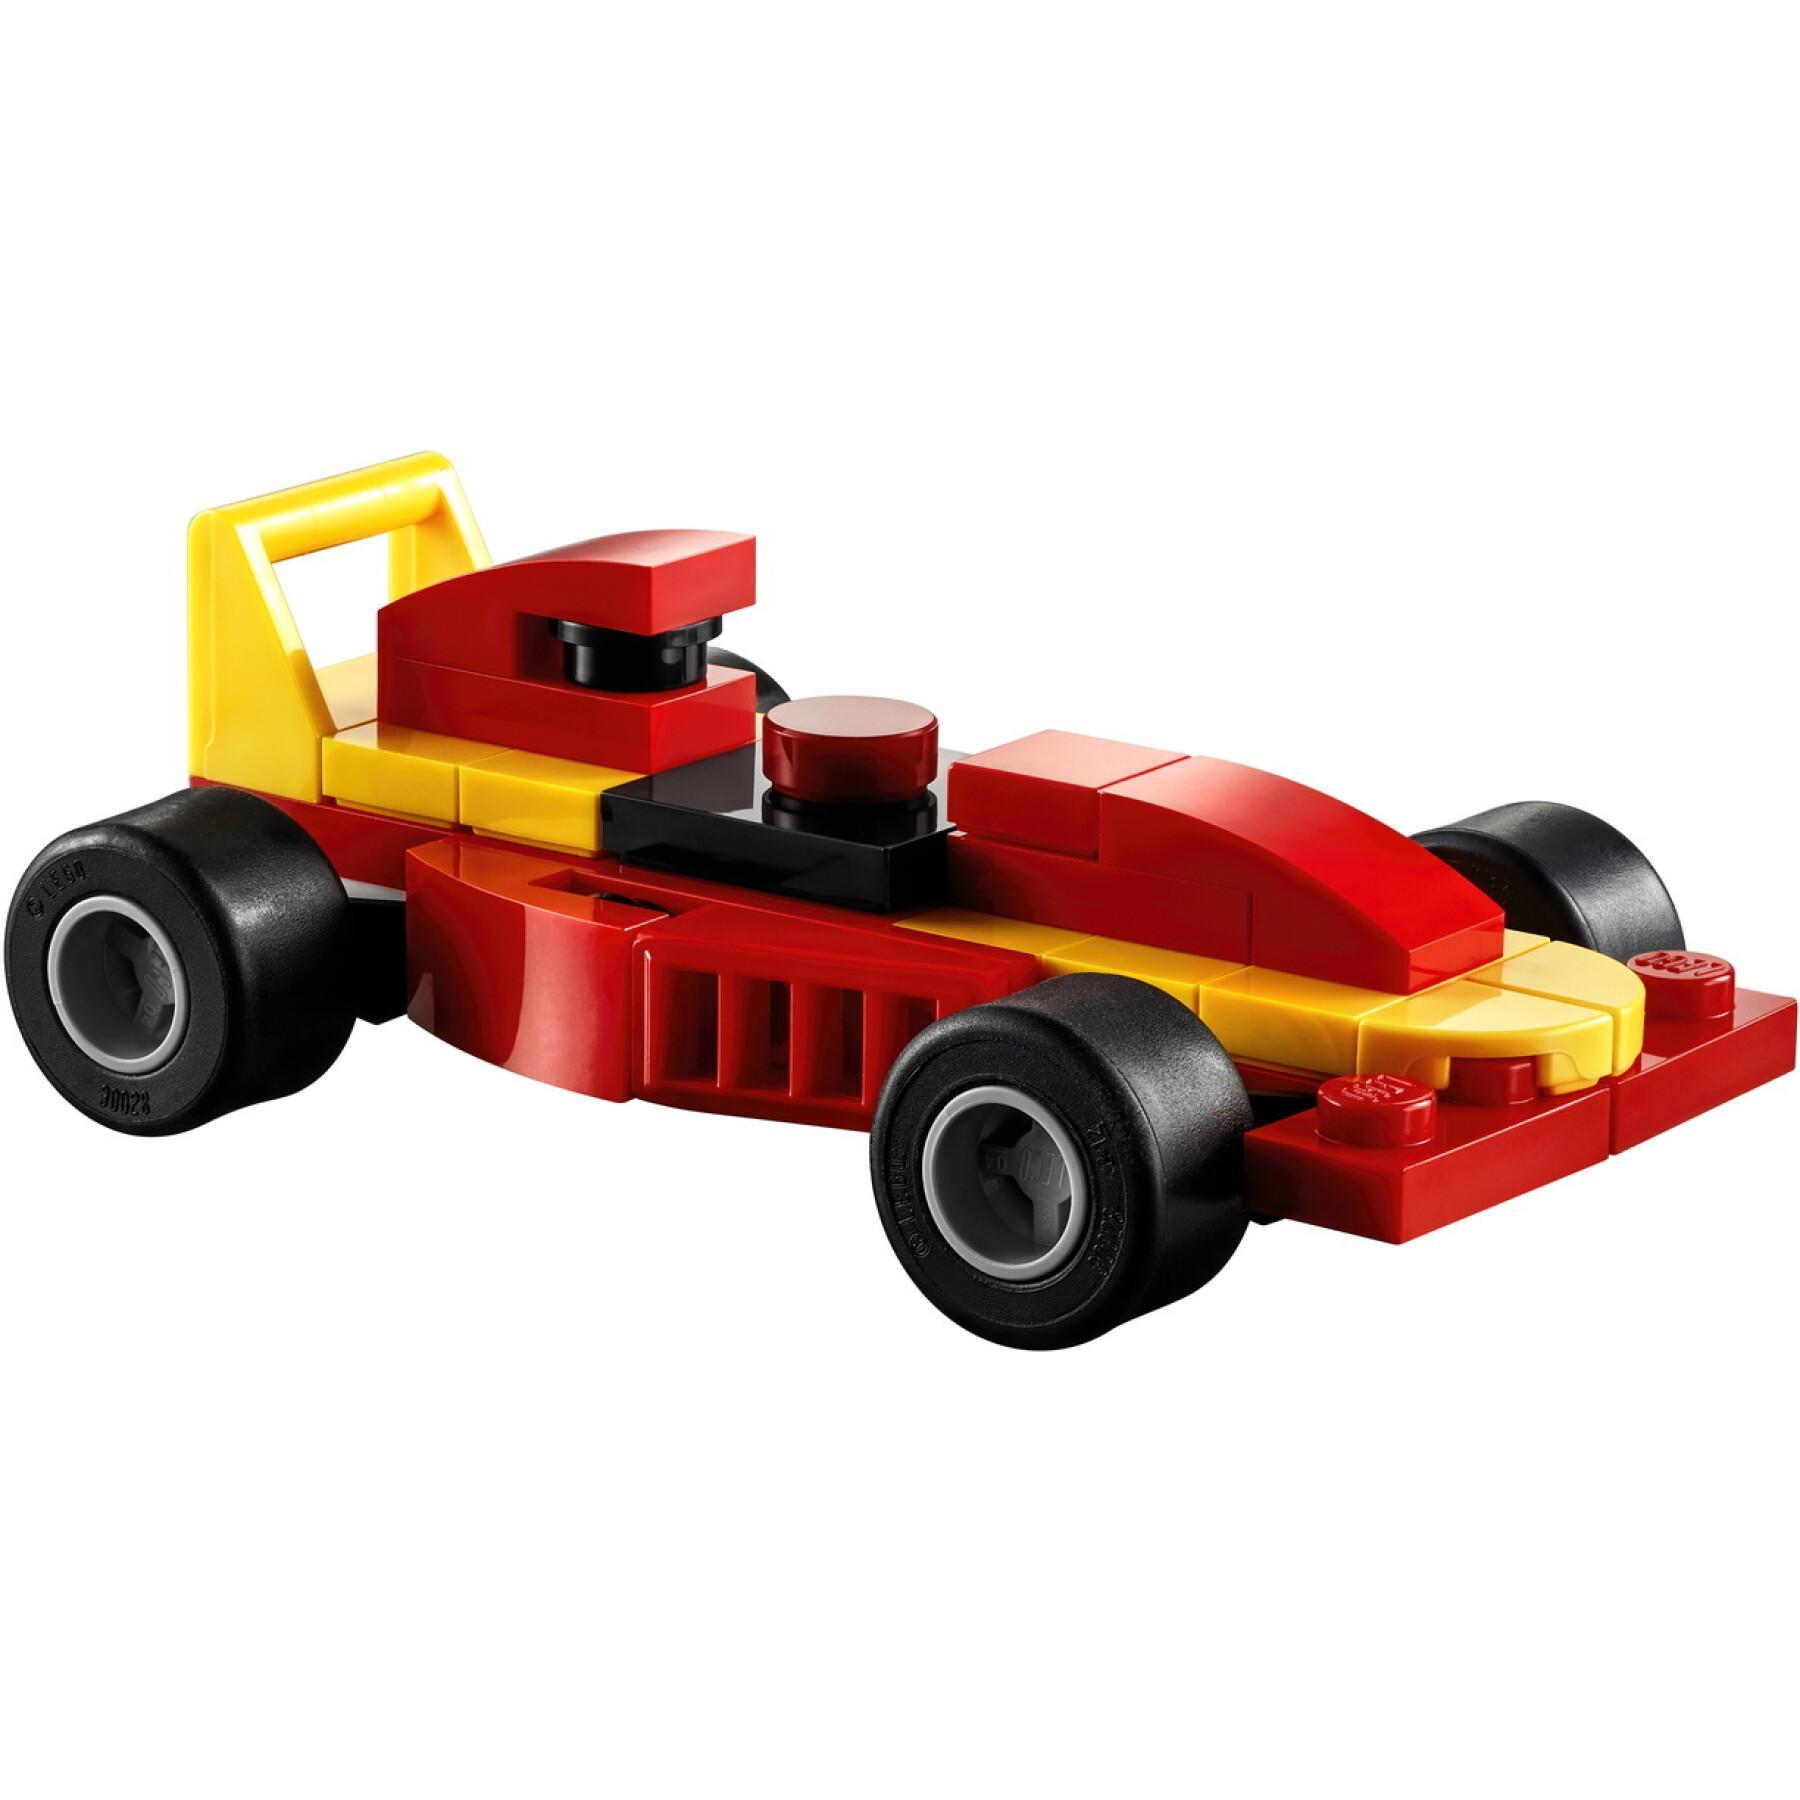 Racing vehicle transporter Lego Creator